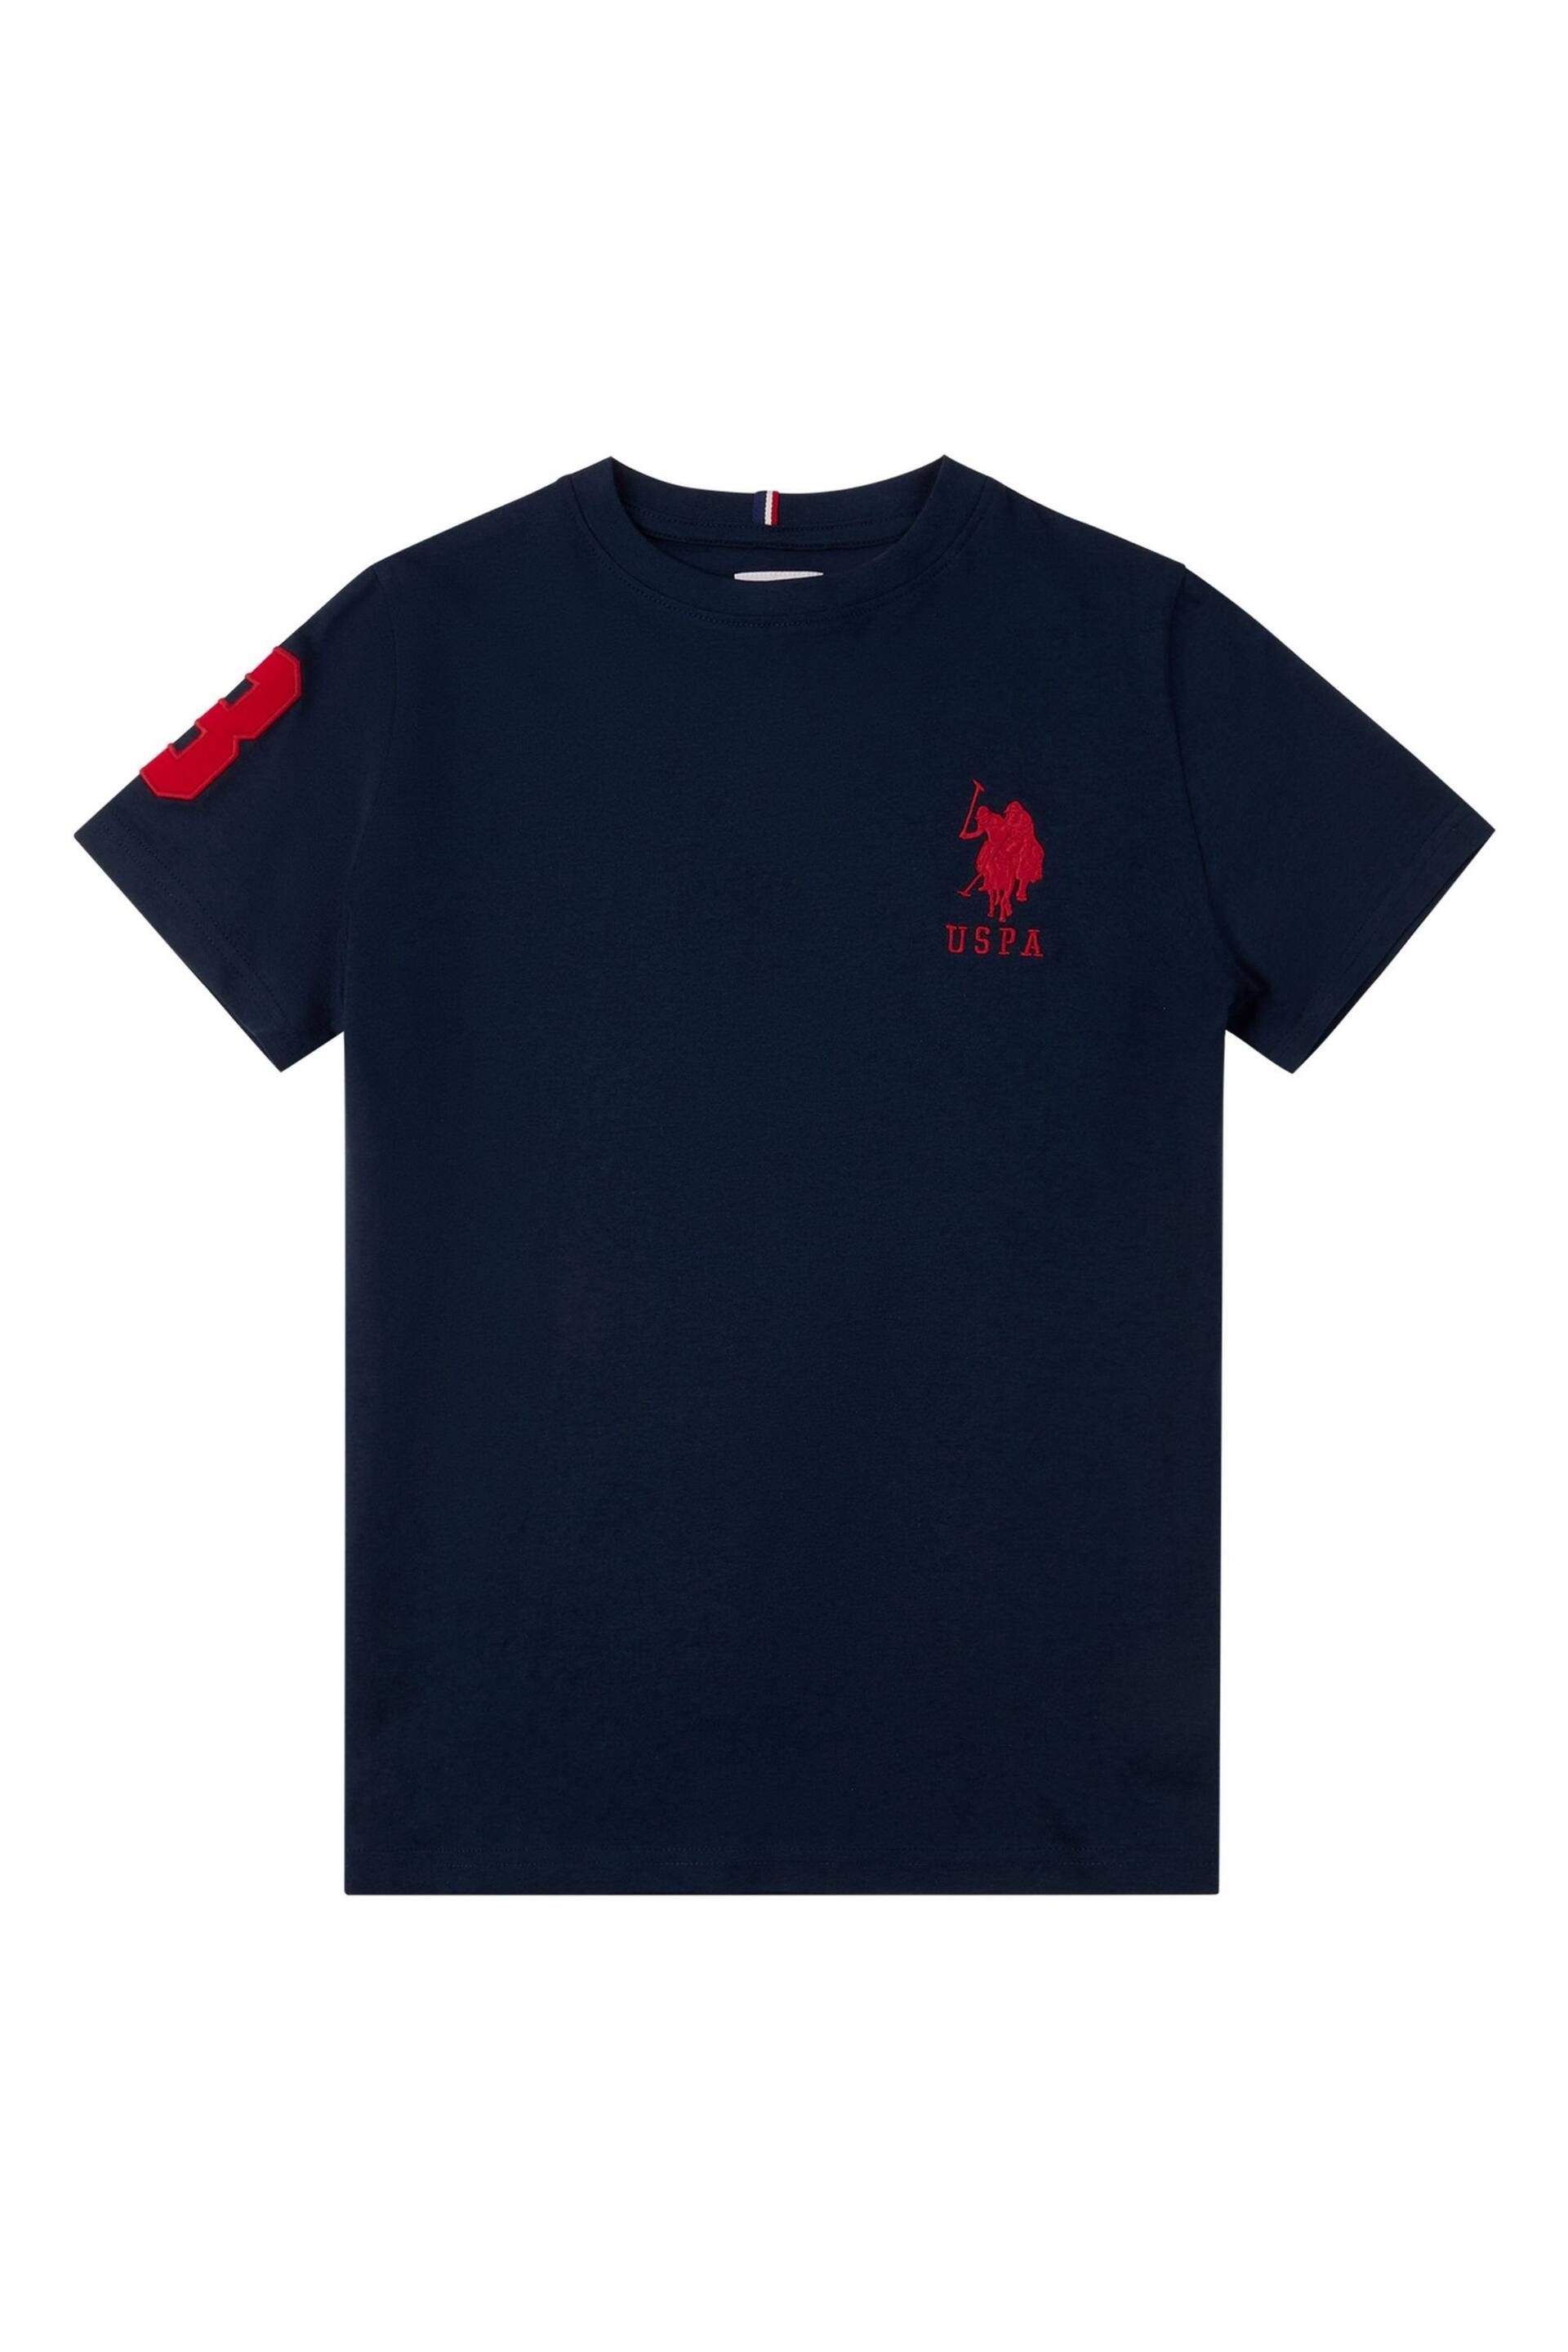 U.S. Polo Assn. Boys Player 3 T-Shirt - Image 6 of 8